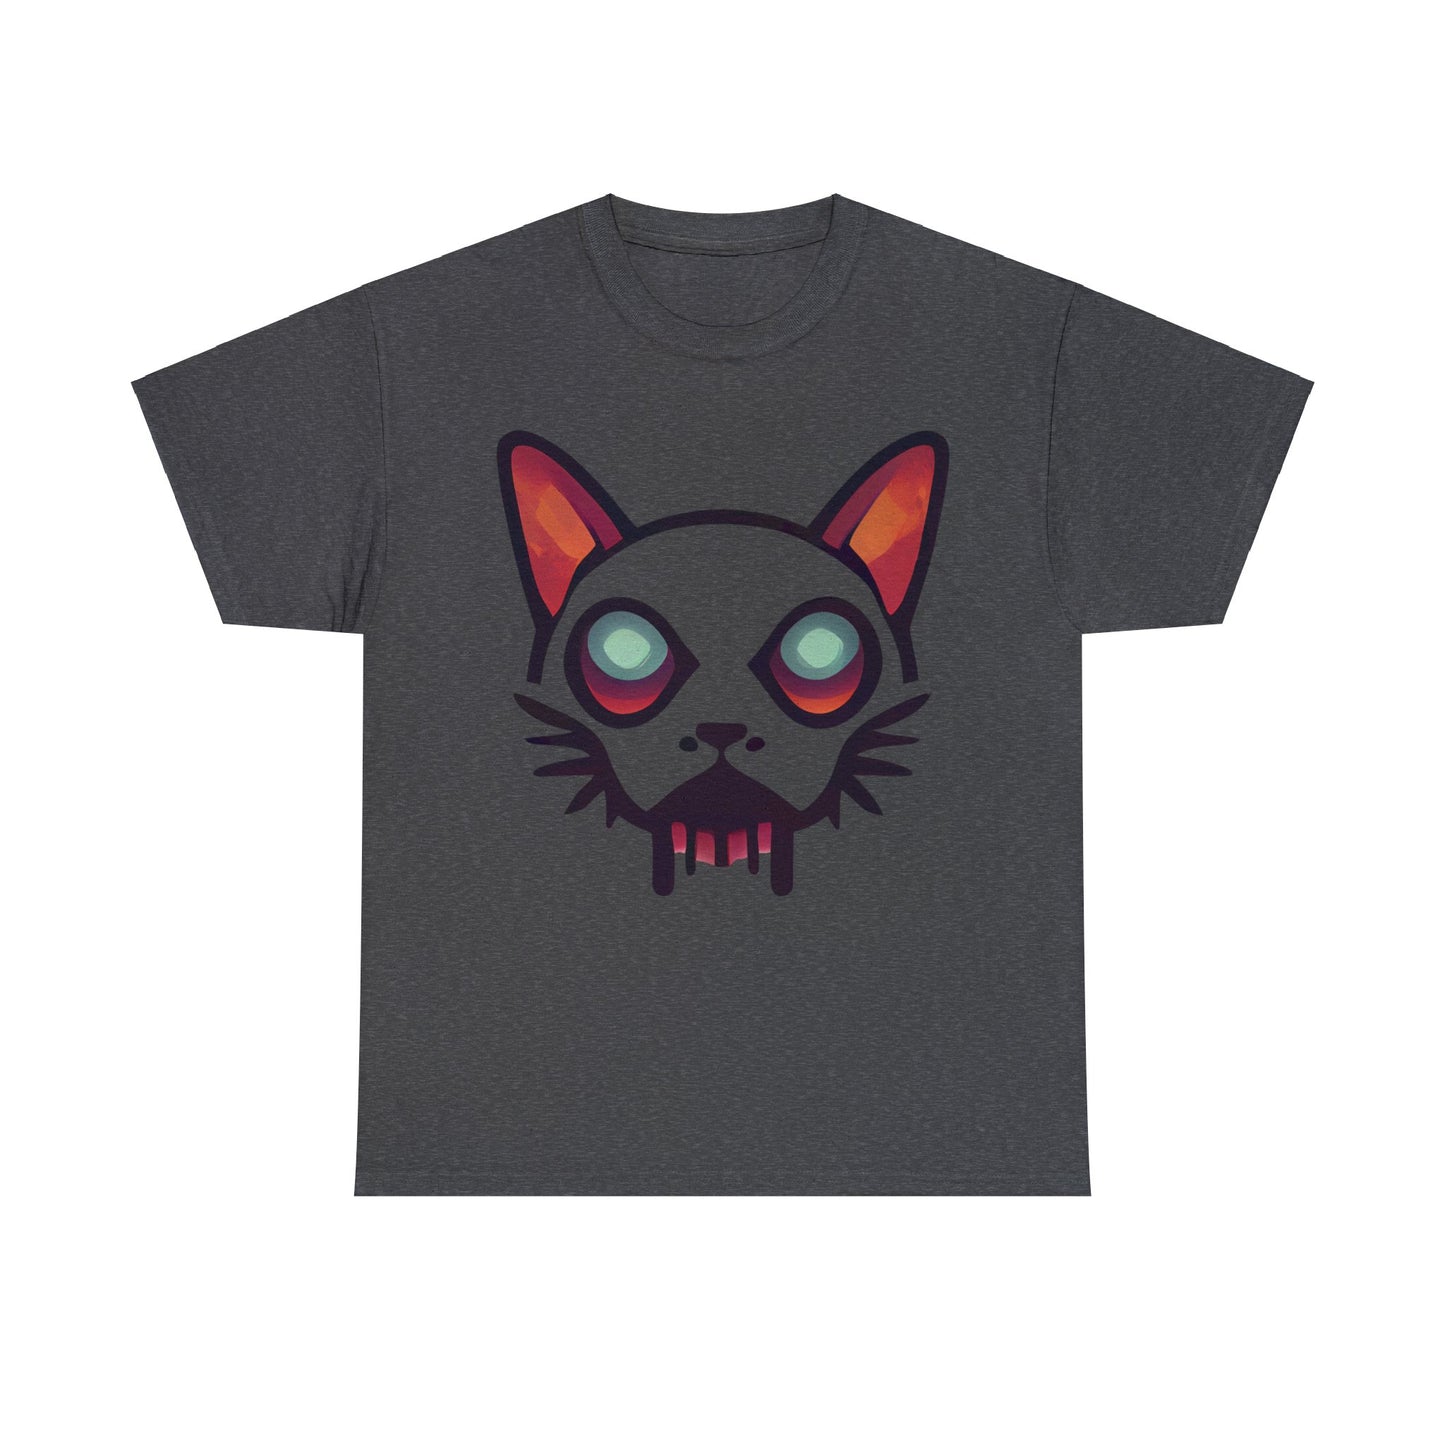 Zombie Monster Cat Design Popular Culture Graphic Tee